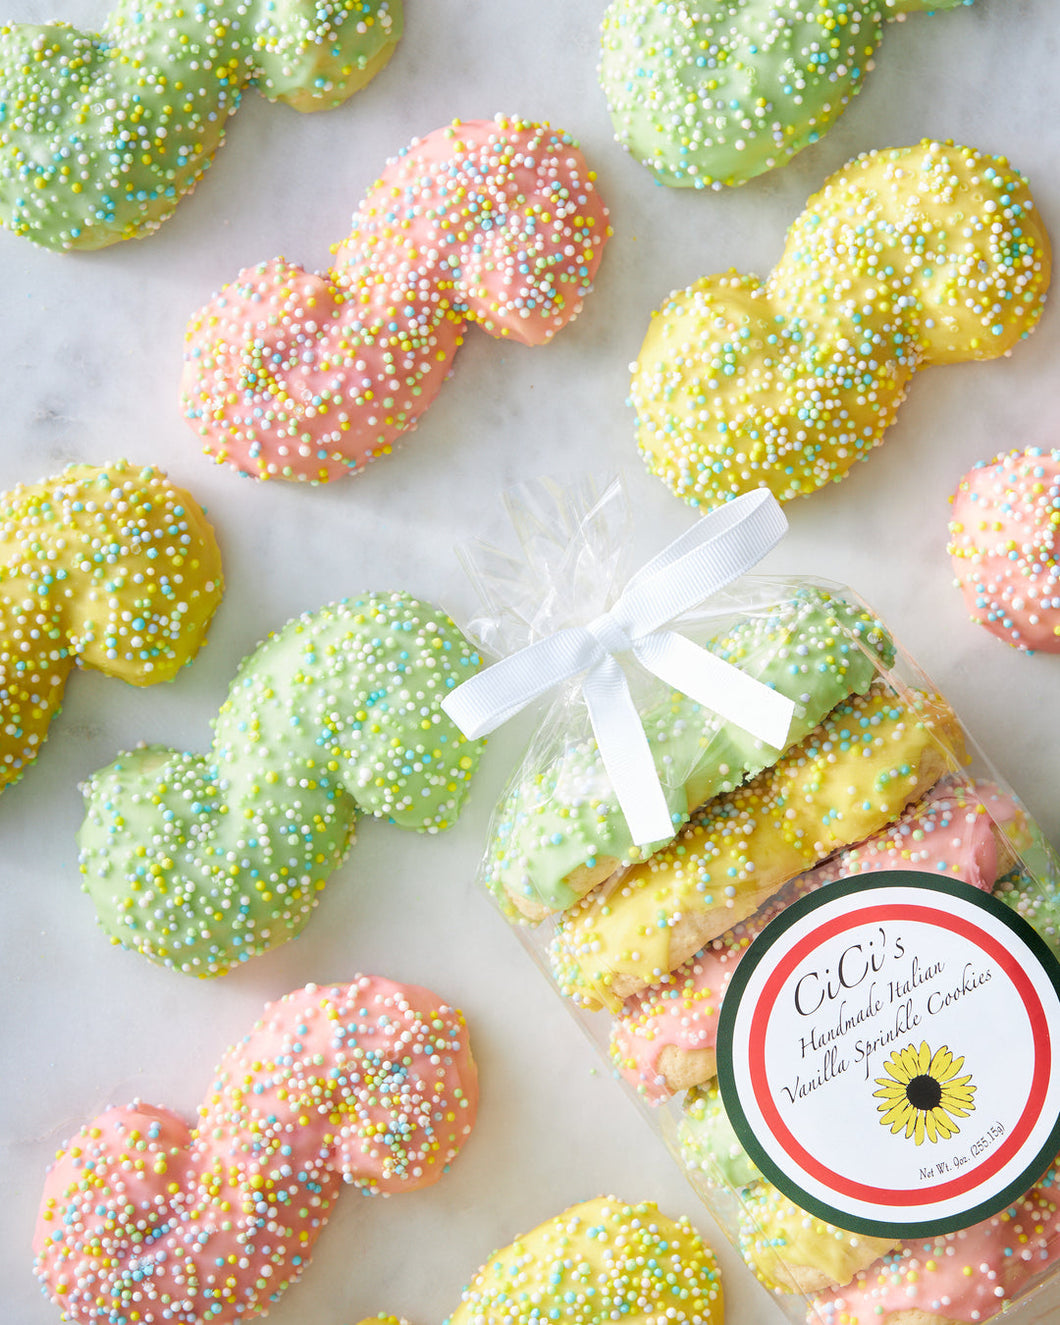 Cici's Italian Sprinkle Cookies - Spring Vanilla